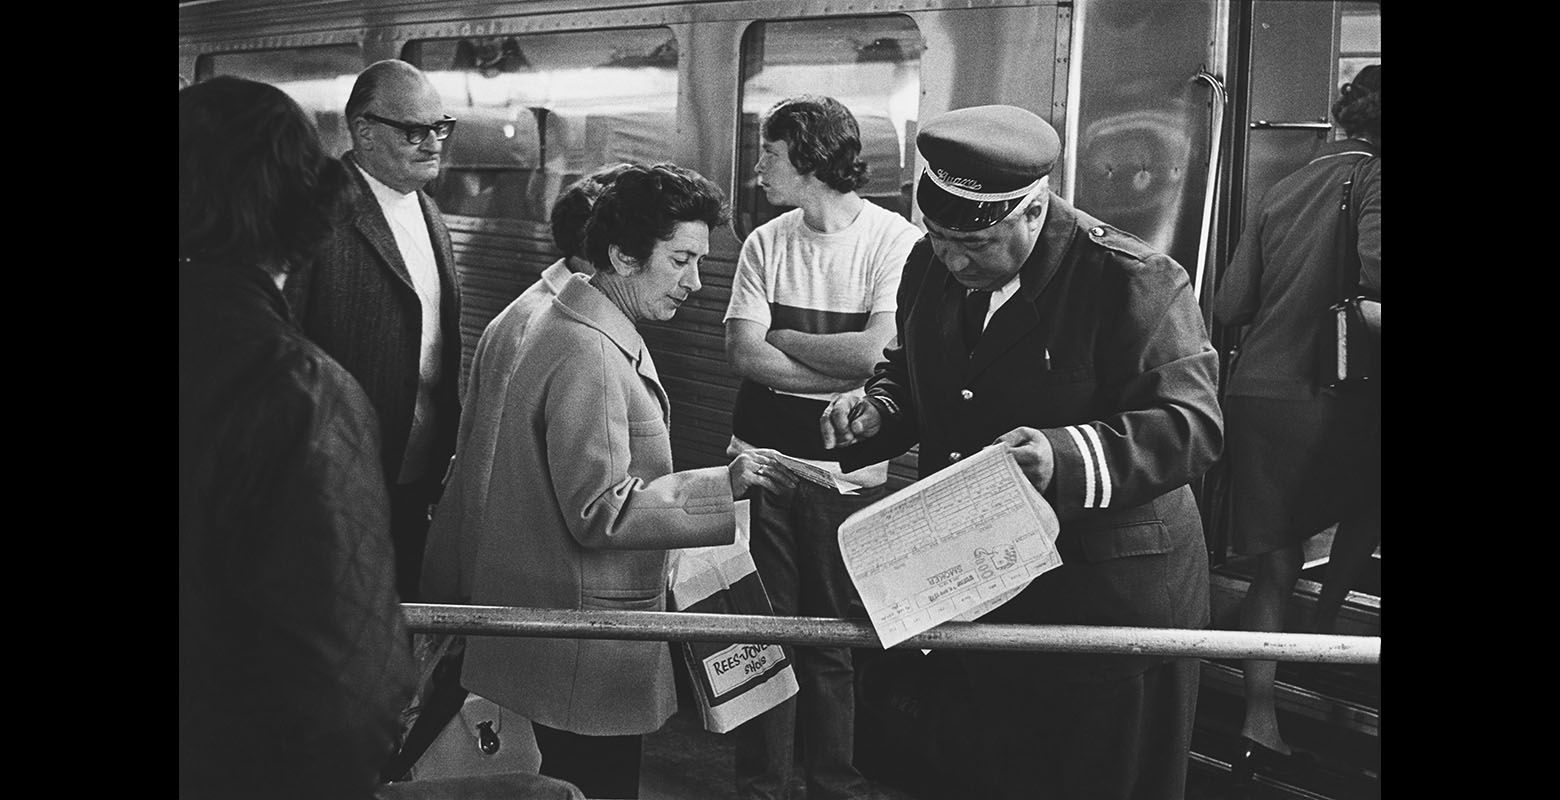 A man checks a ticket of a woman at a train station